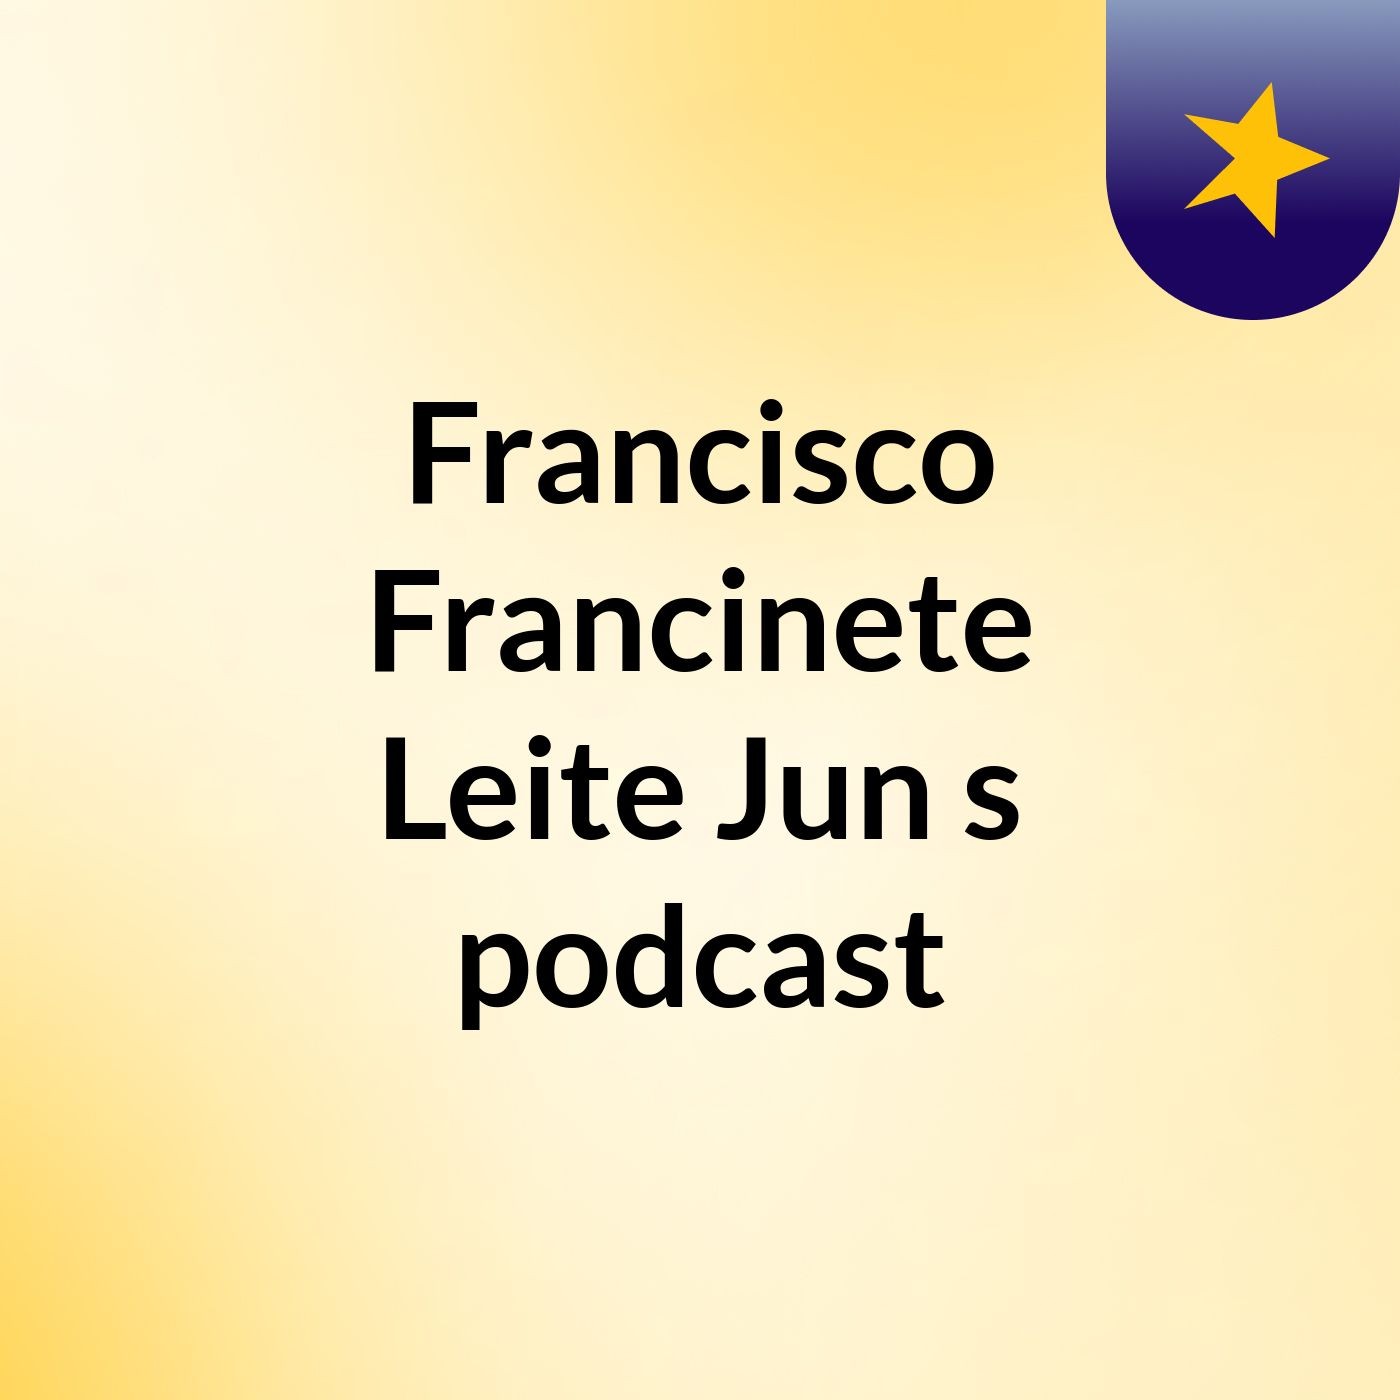 Francisco Francinete Leite Jun's podcast